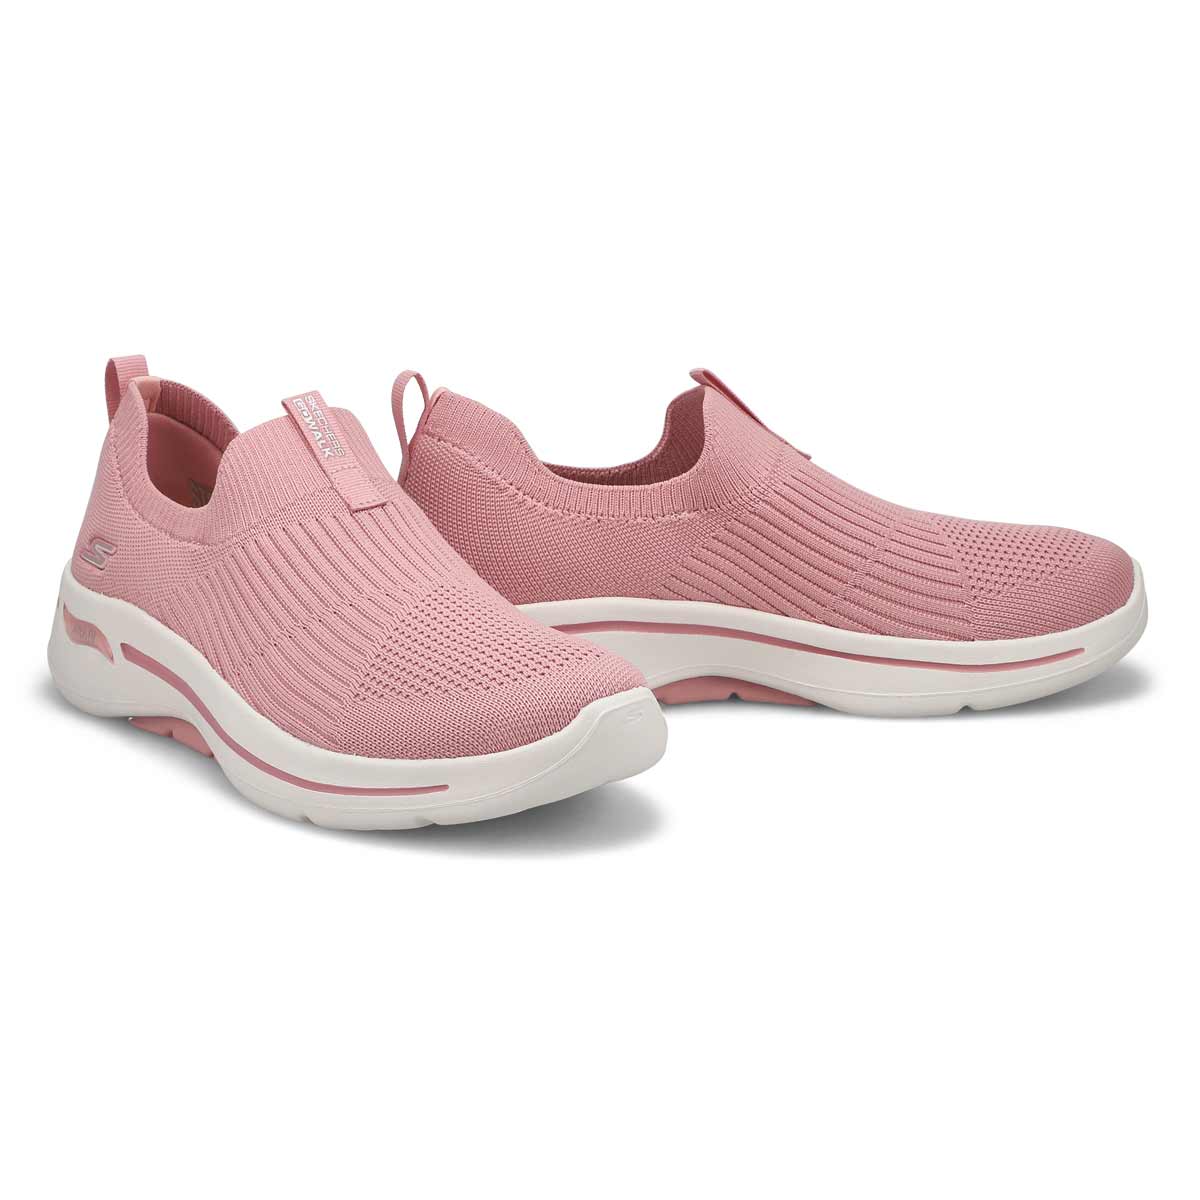 Women's Go Walk Arch Fit Iconic Sneaker - Pink